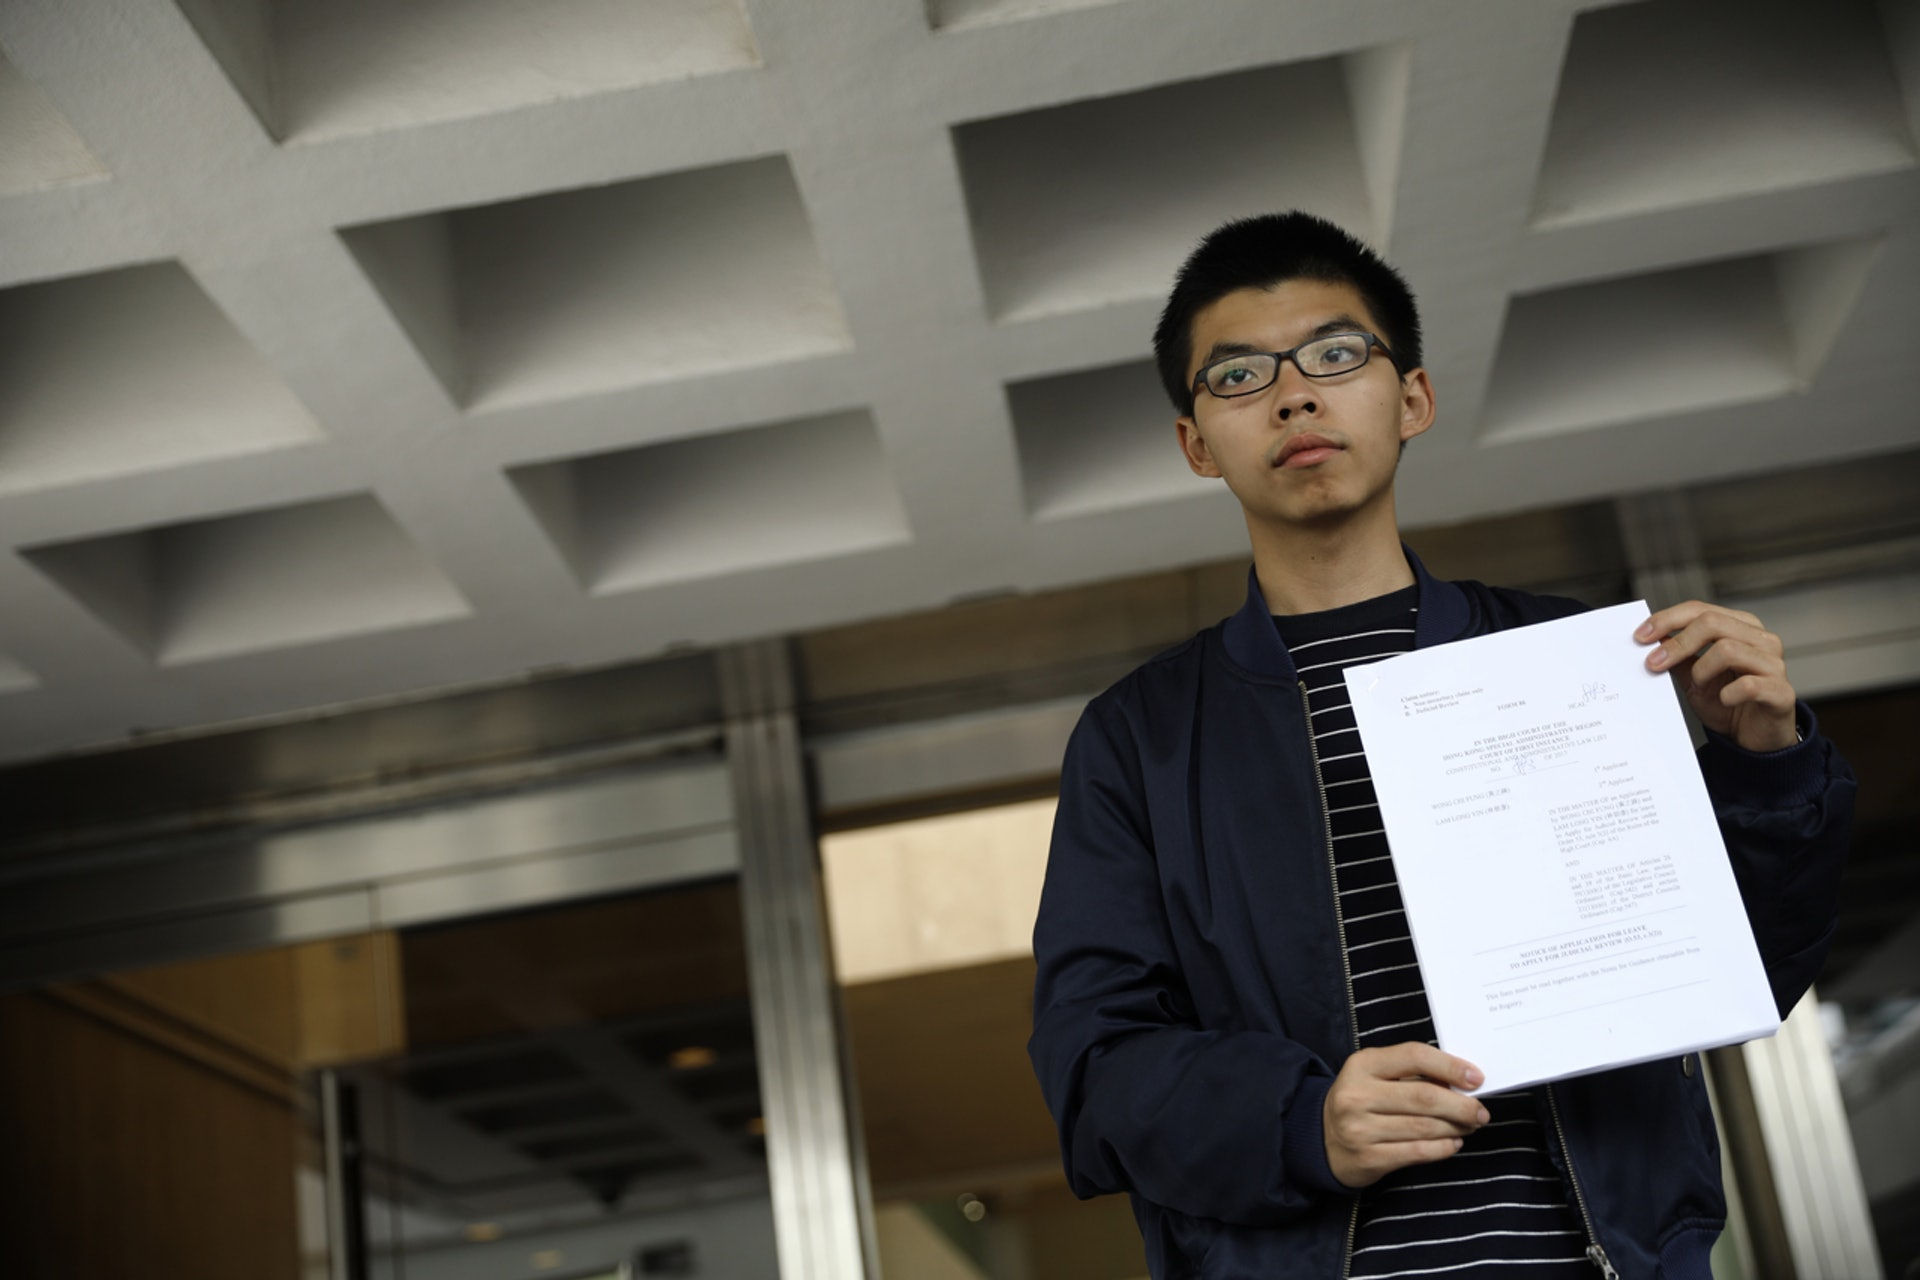 Hong Kong’s freedom shrinking… China fears defeat: Pro-democracy activist Joshua Wong